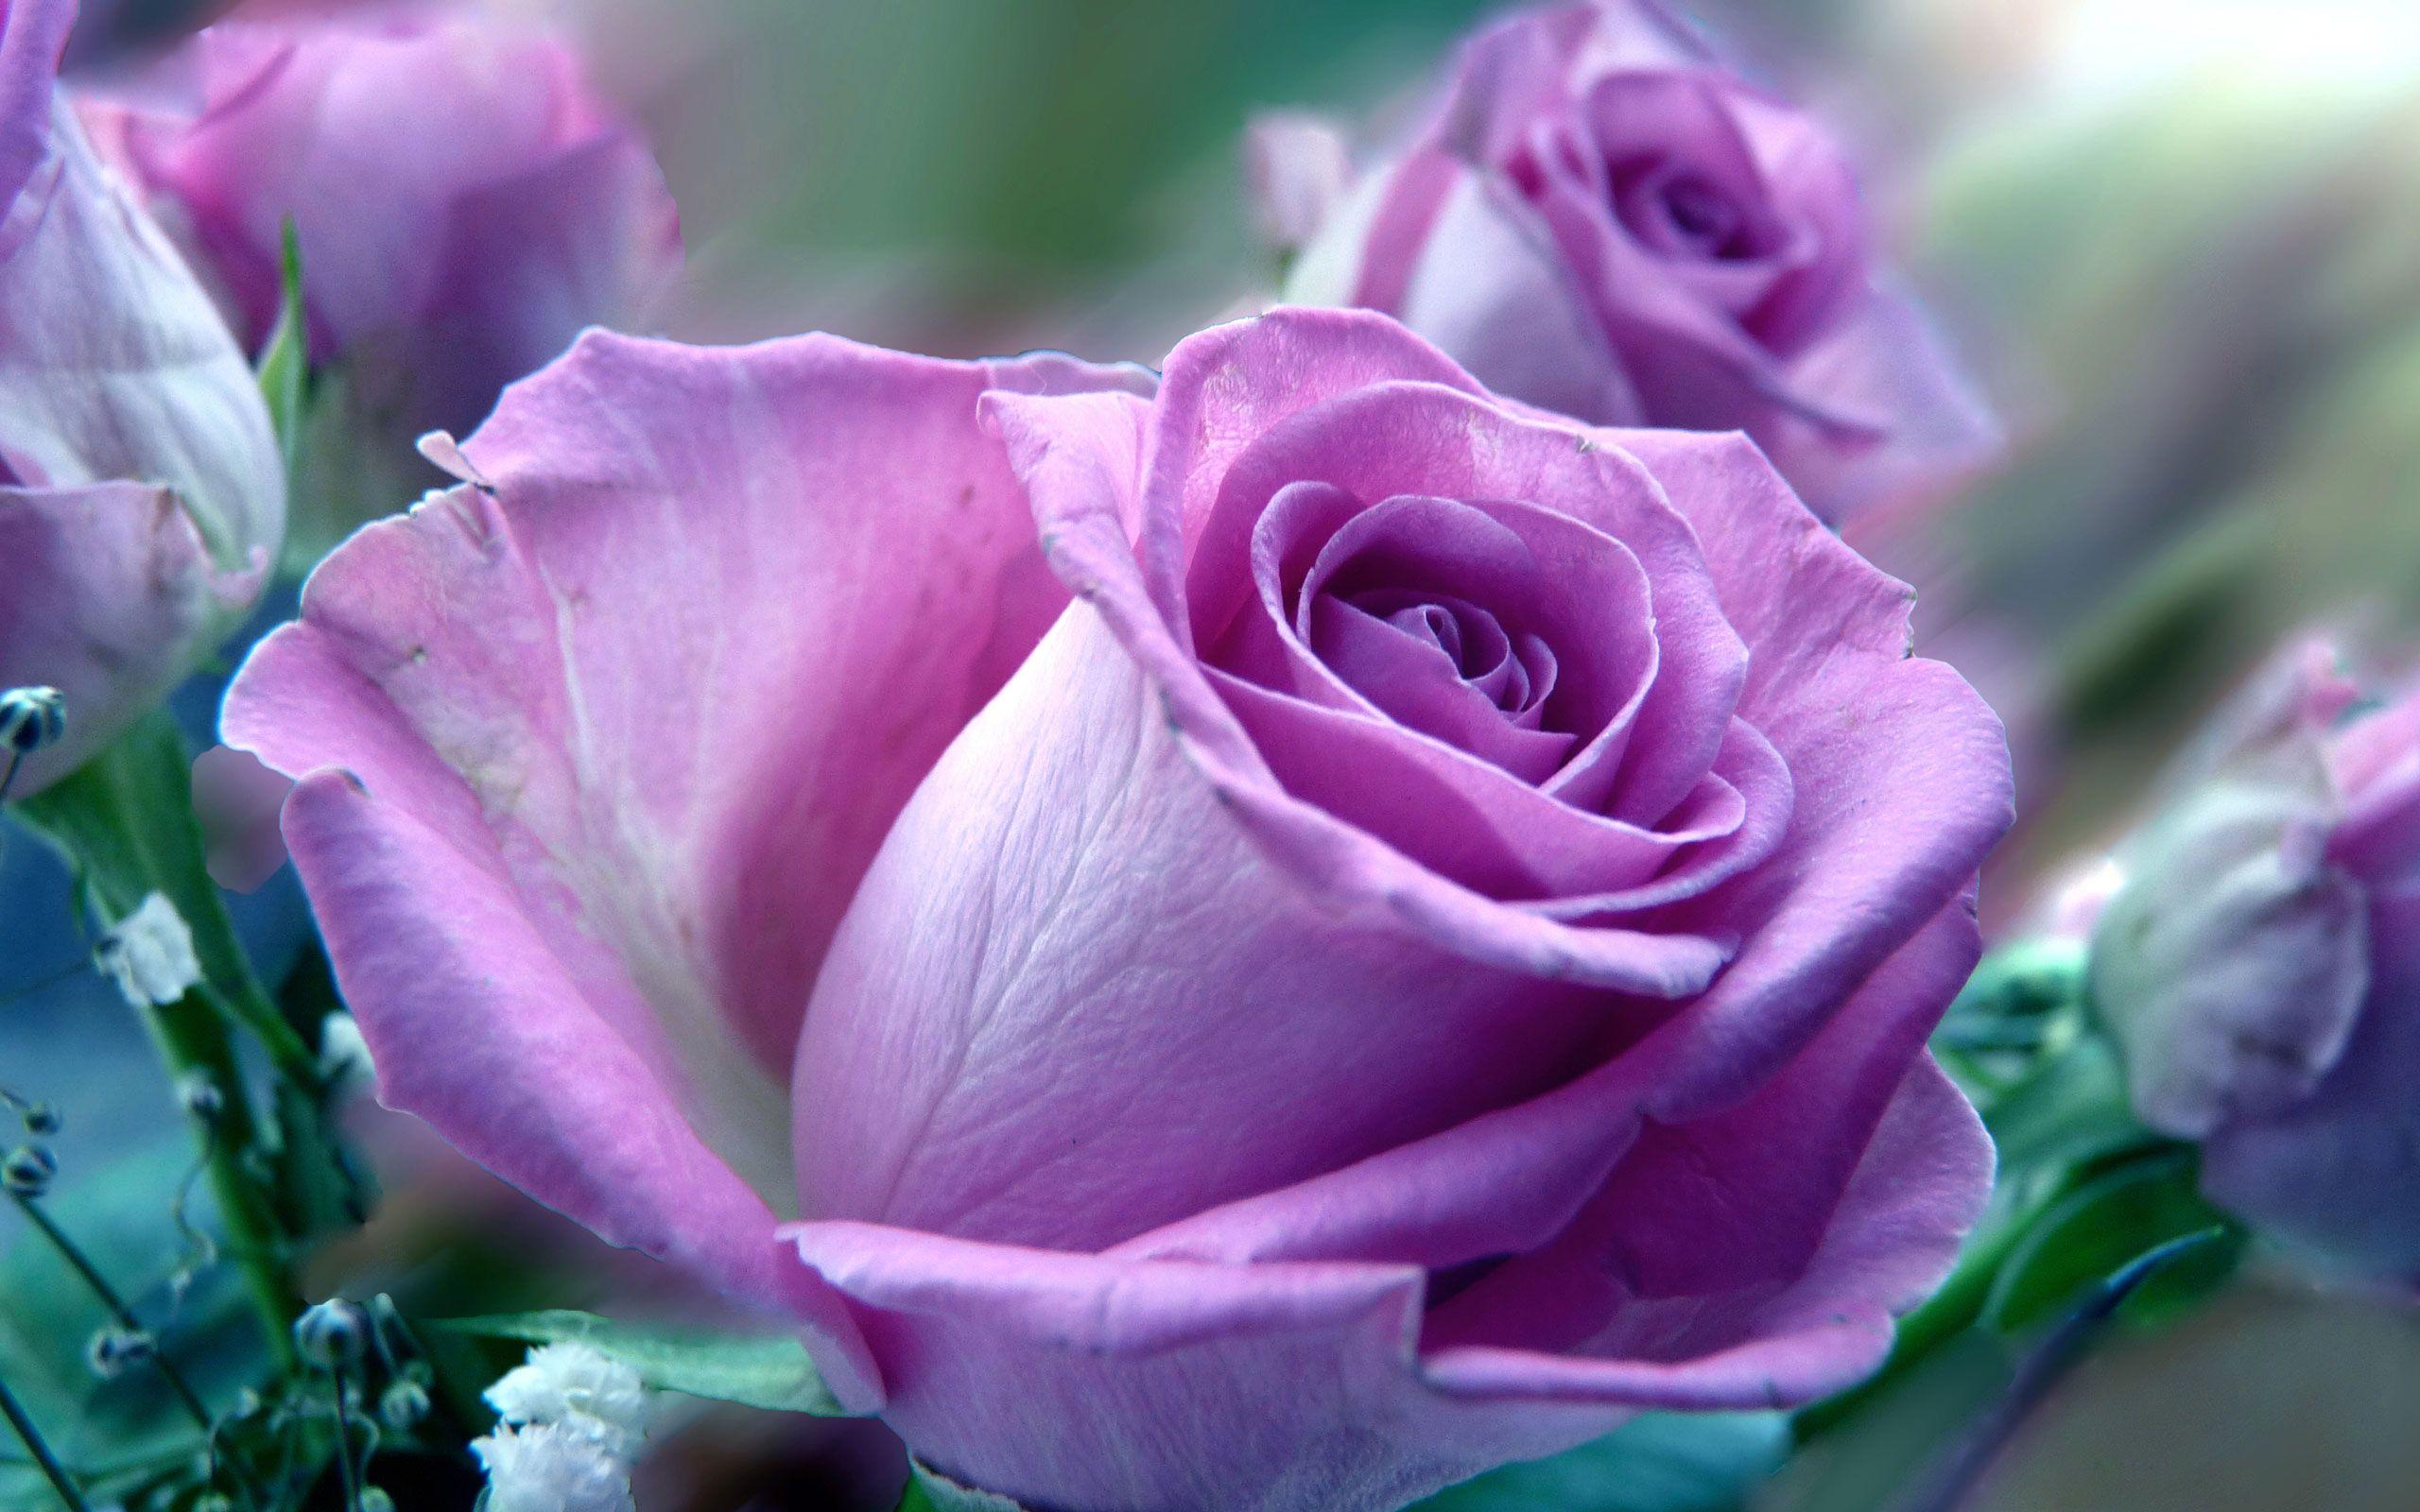 purple rose bouquet